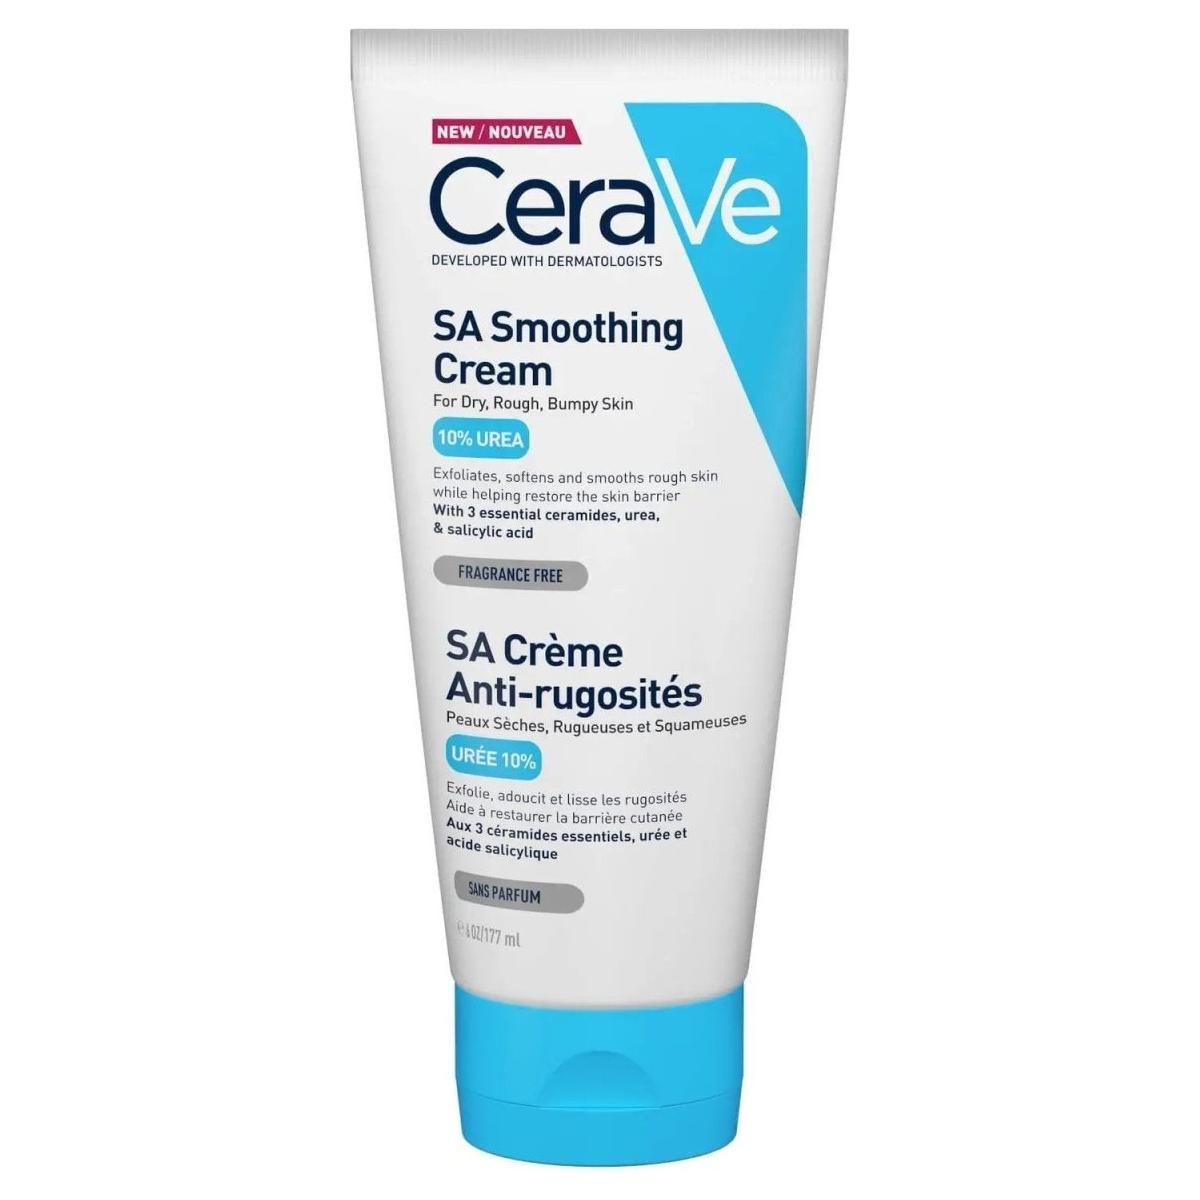 CeraVe | SA Smoothing Cream | 177ml - DG International Ventures Limited